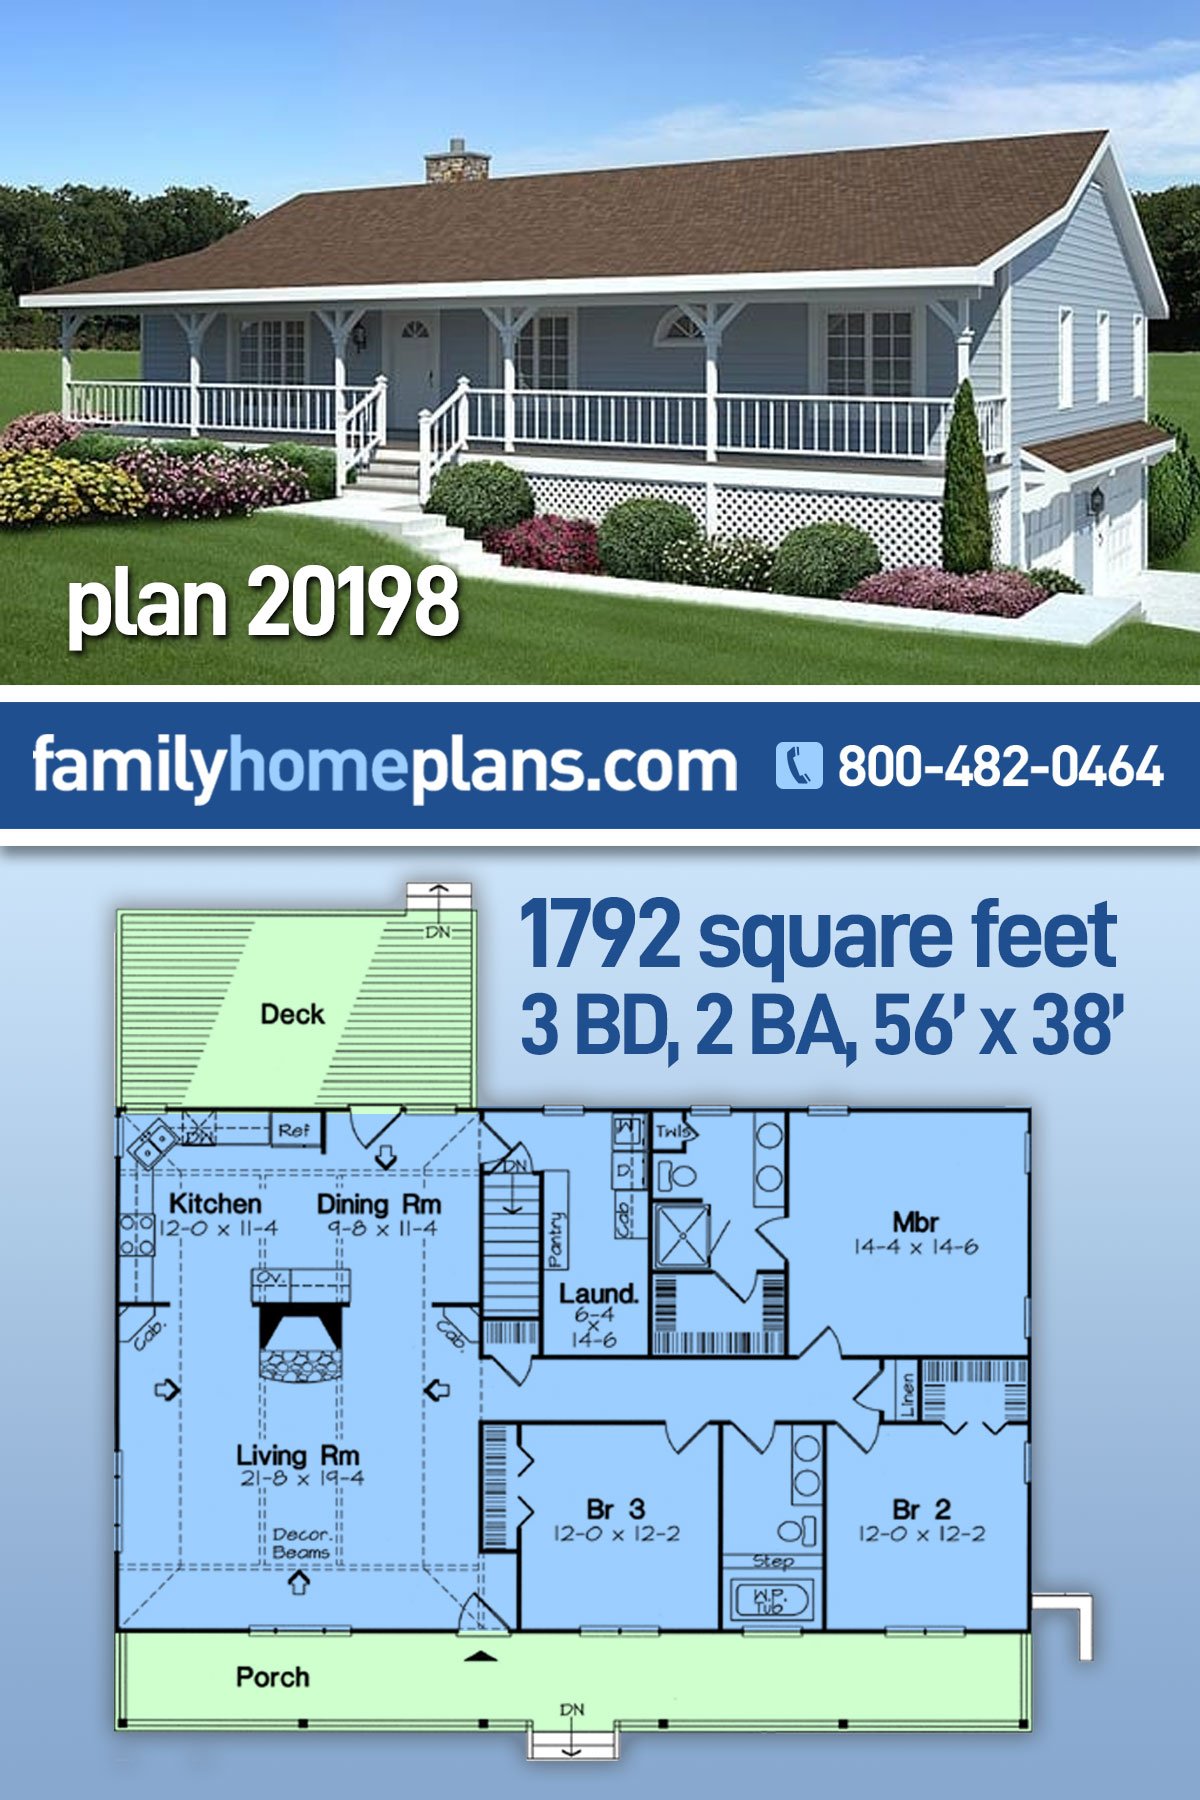 House Plan 20198